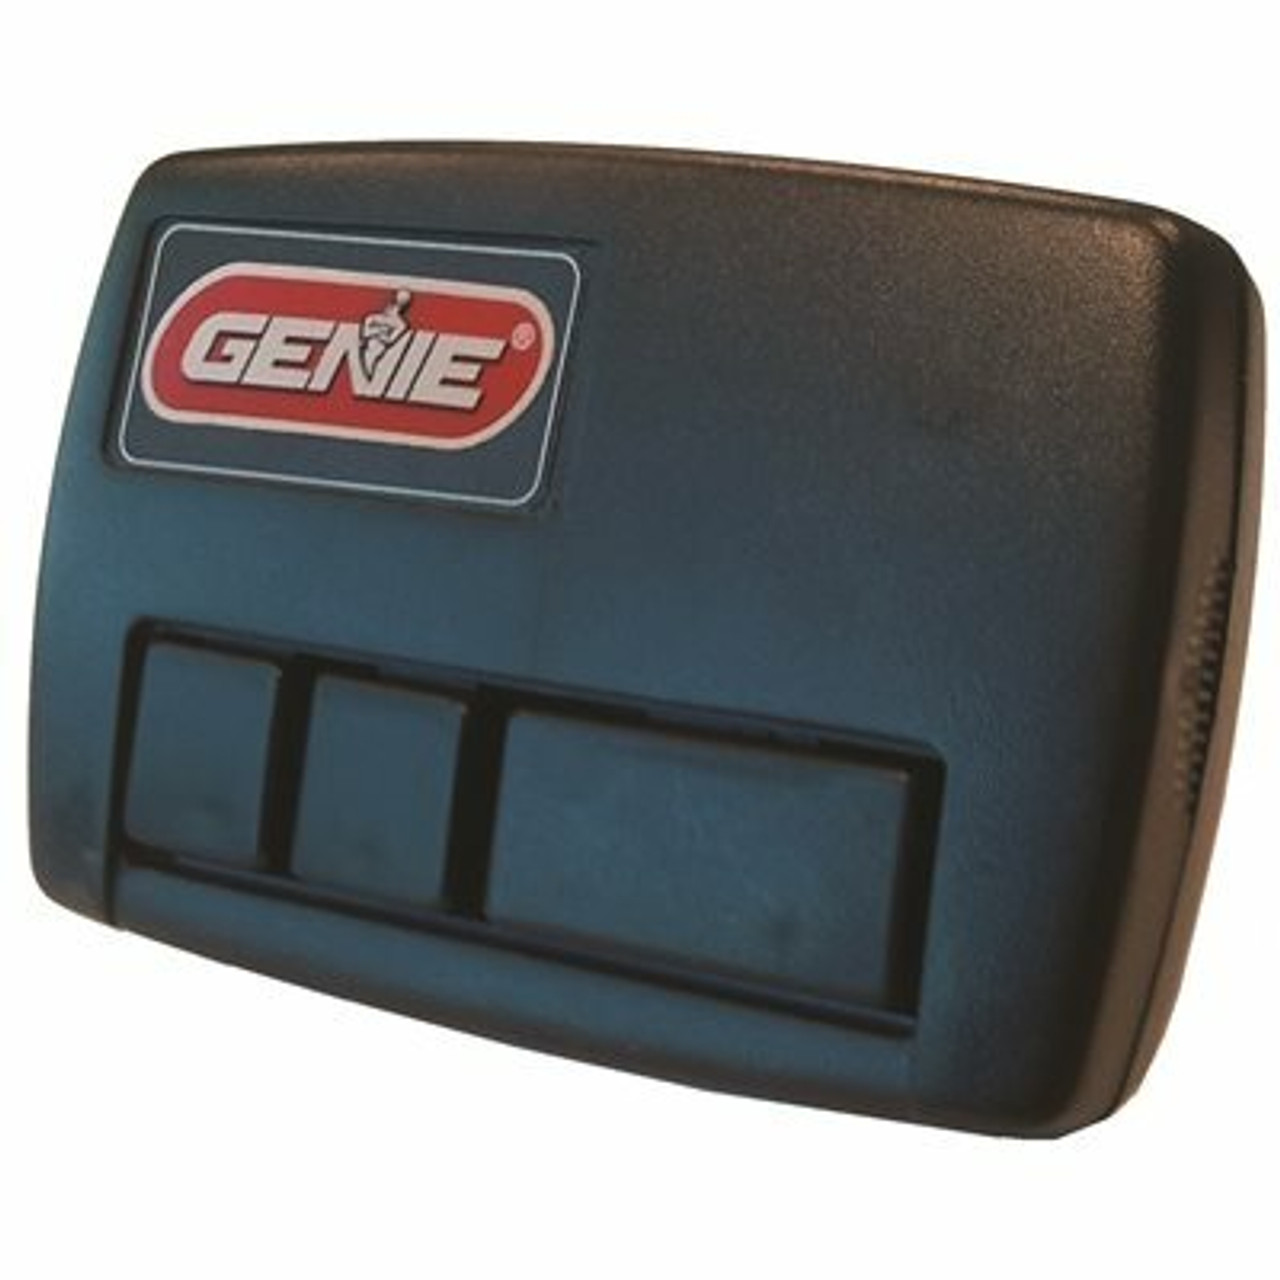 Genie Gidfx3.S Remote